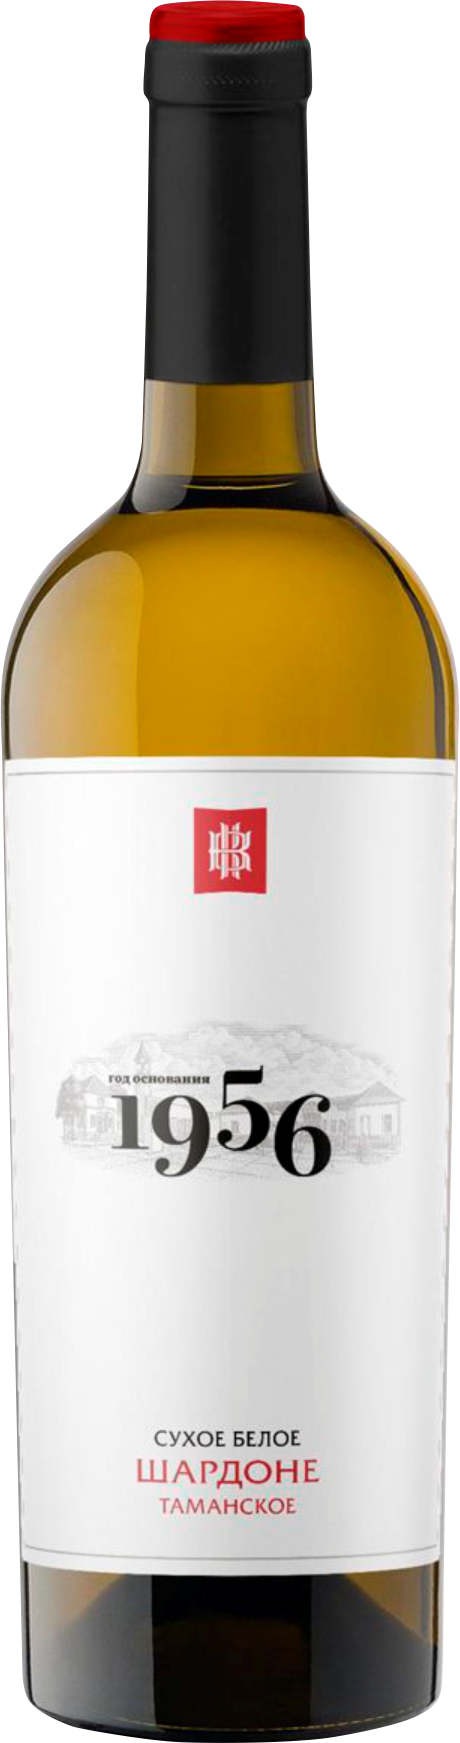 Вино1956 Шардоне Таманское бел.сух.12% 0,75л